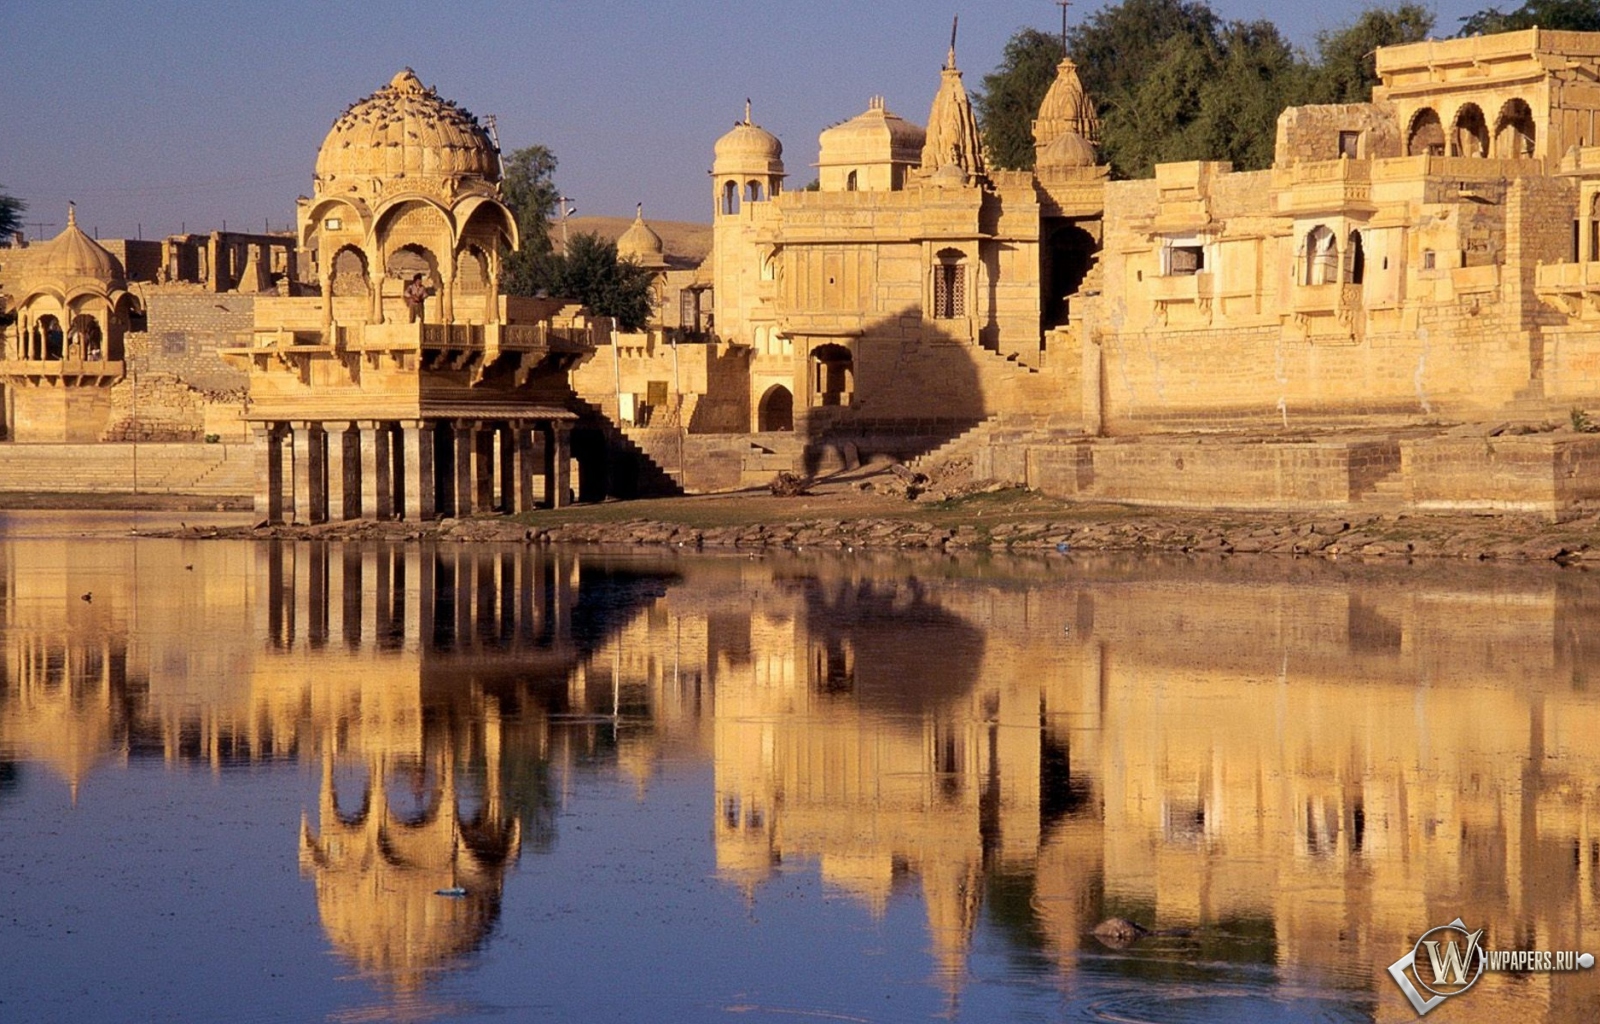 Jaisalmer - Rajasthan - India  1600x1024